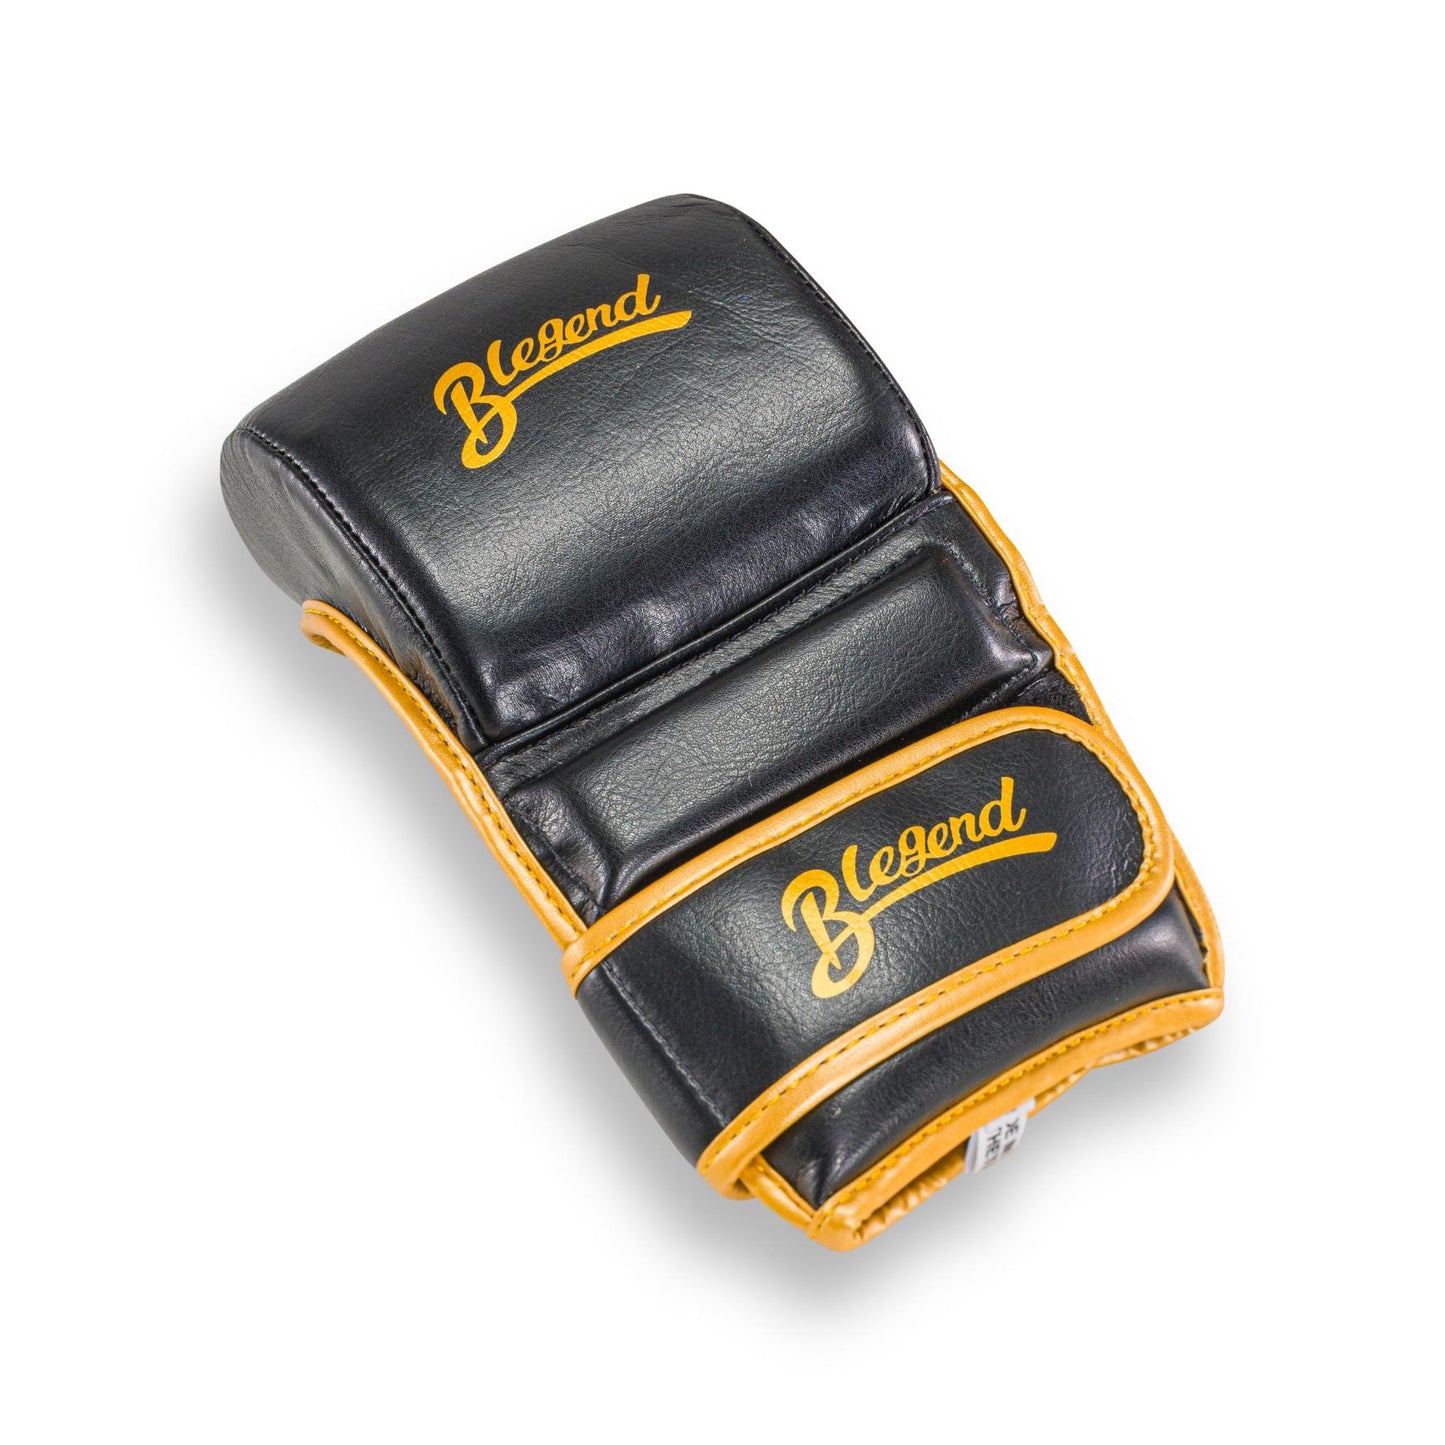 Blegend MMA Gloves Champion 3x Black Gold